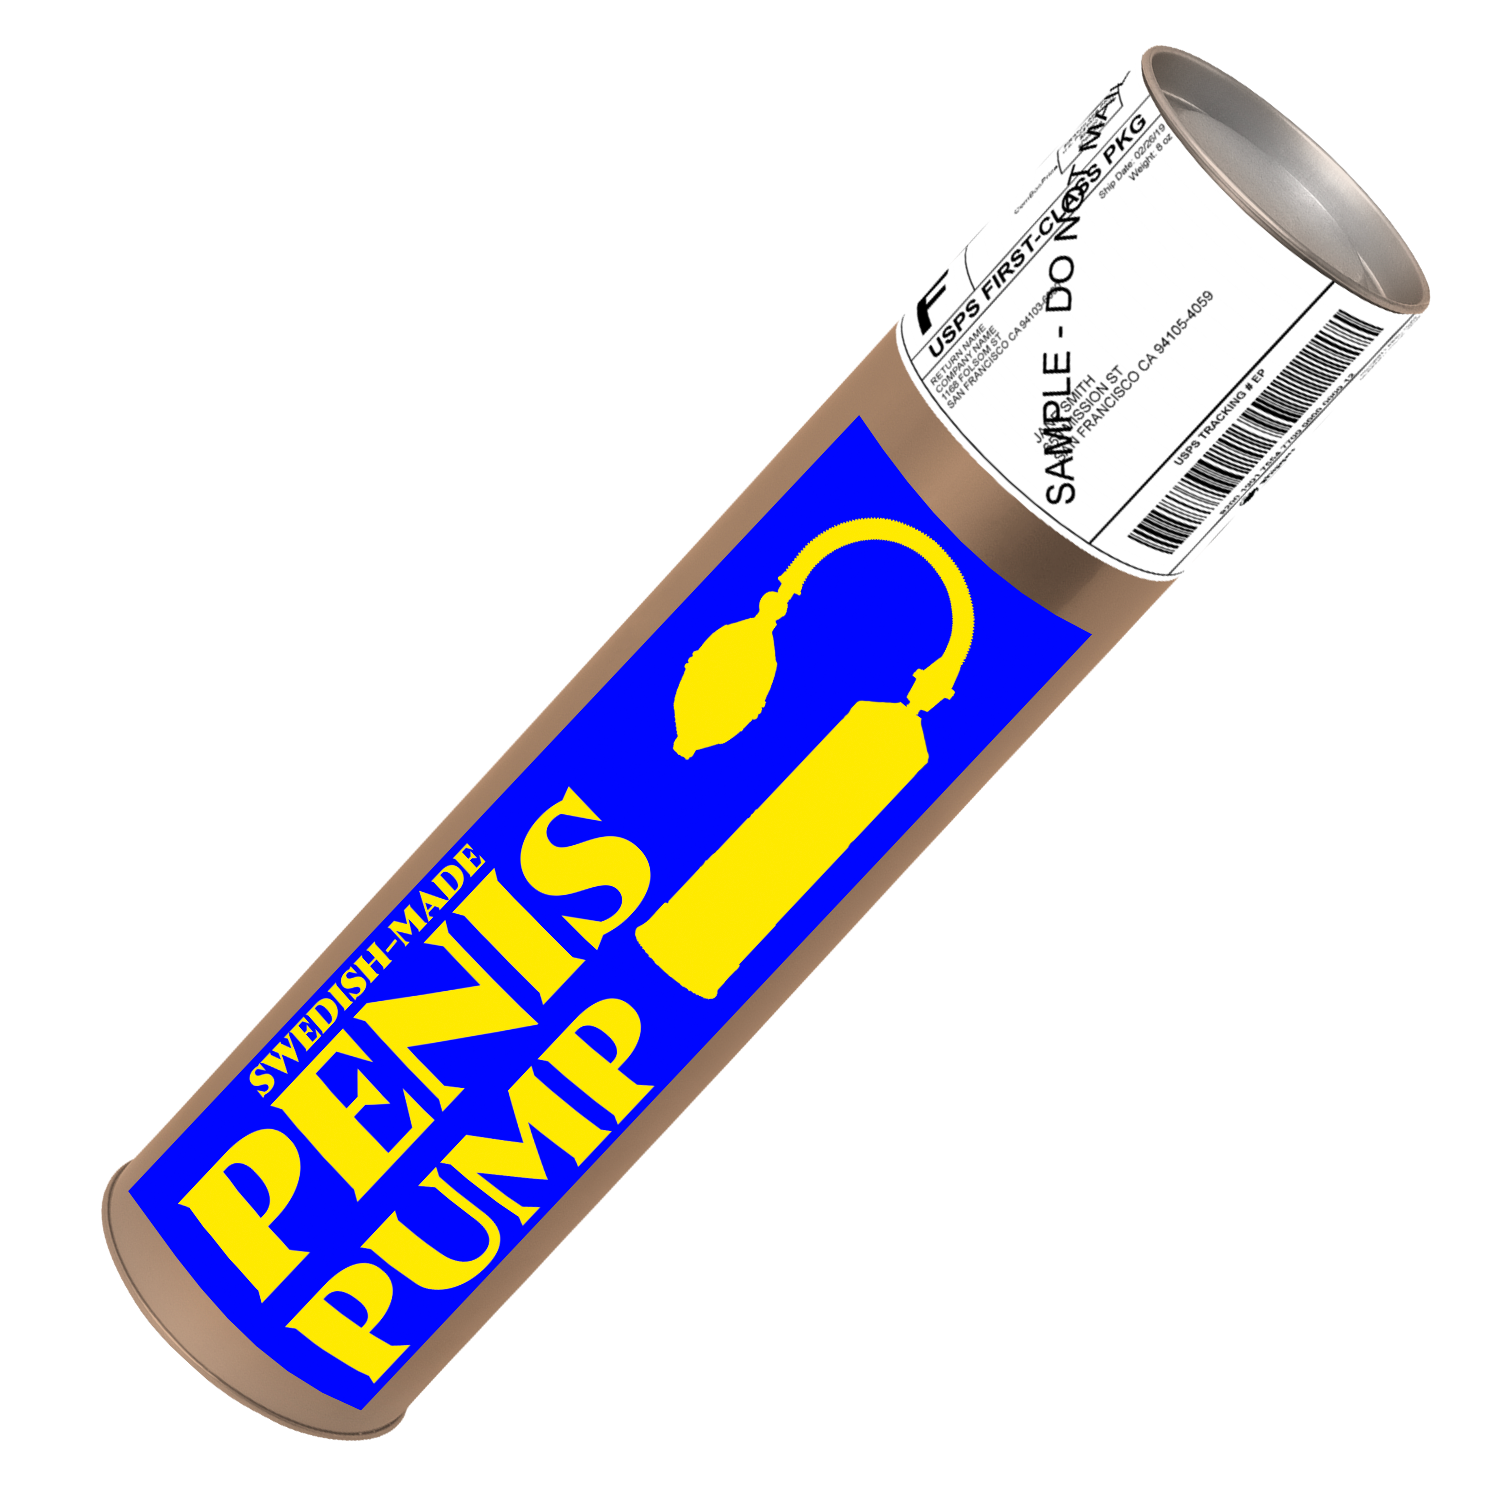 Swedish-Made Penis Pump Prank Package Tube